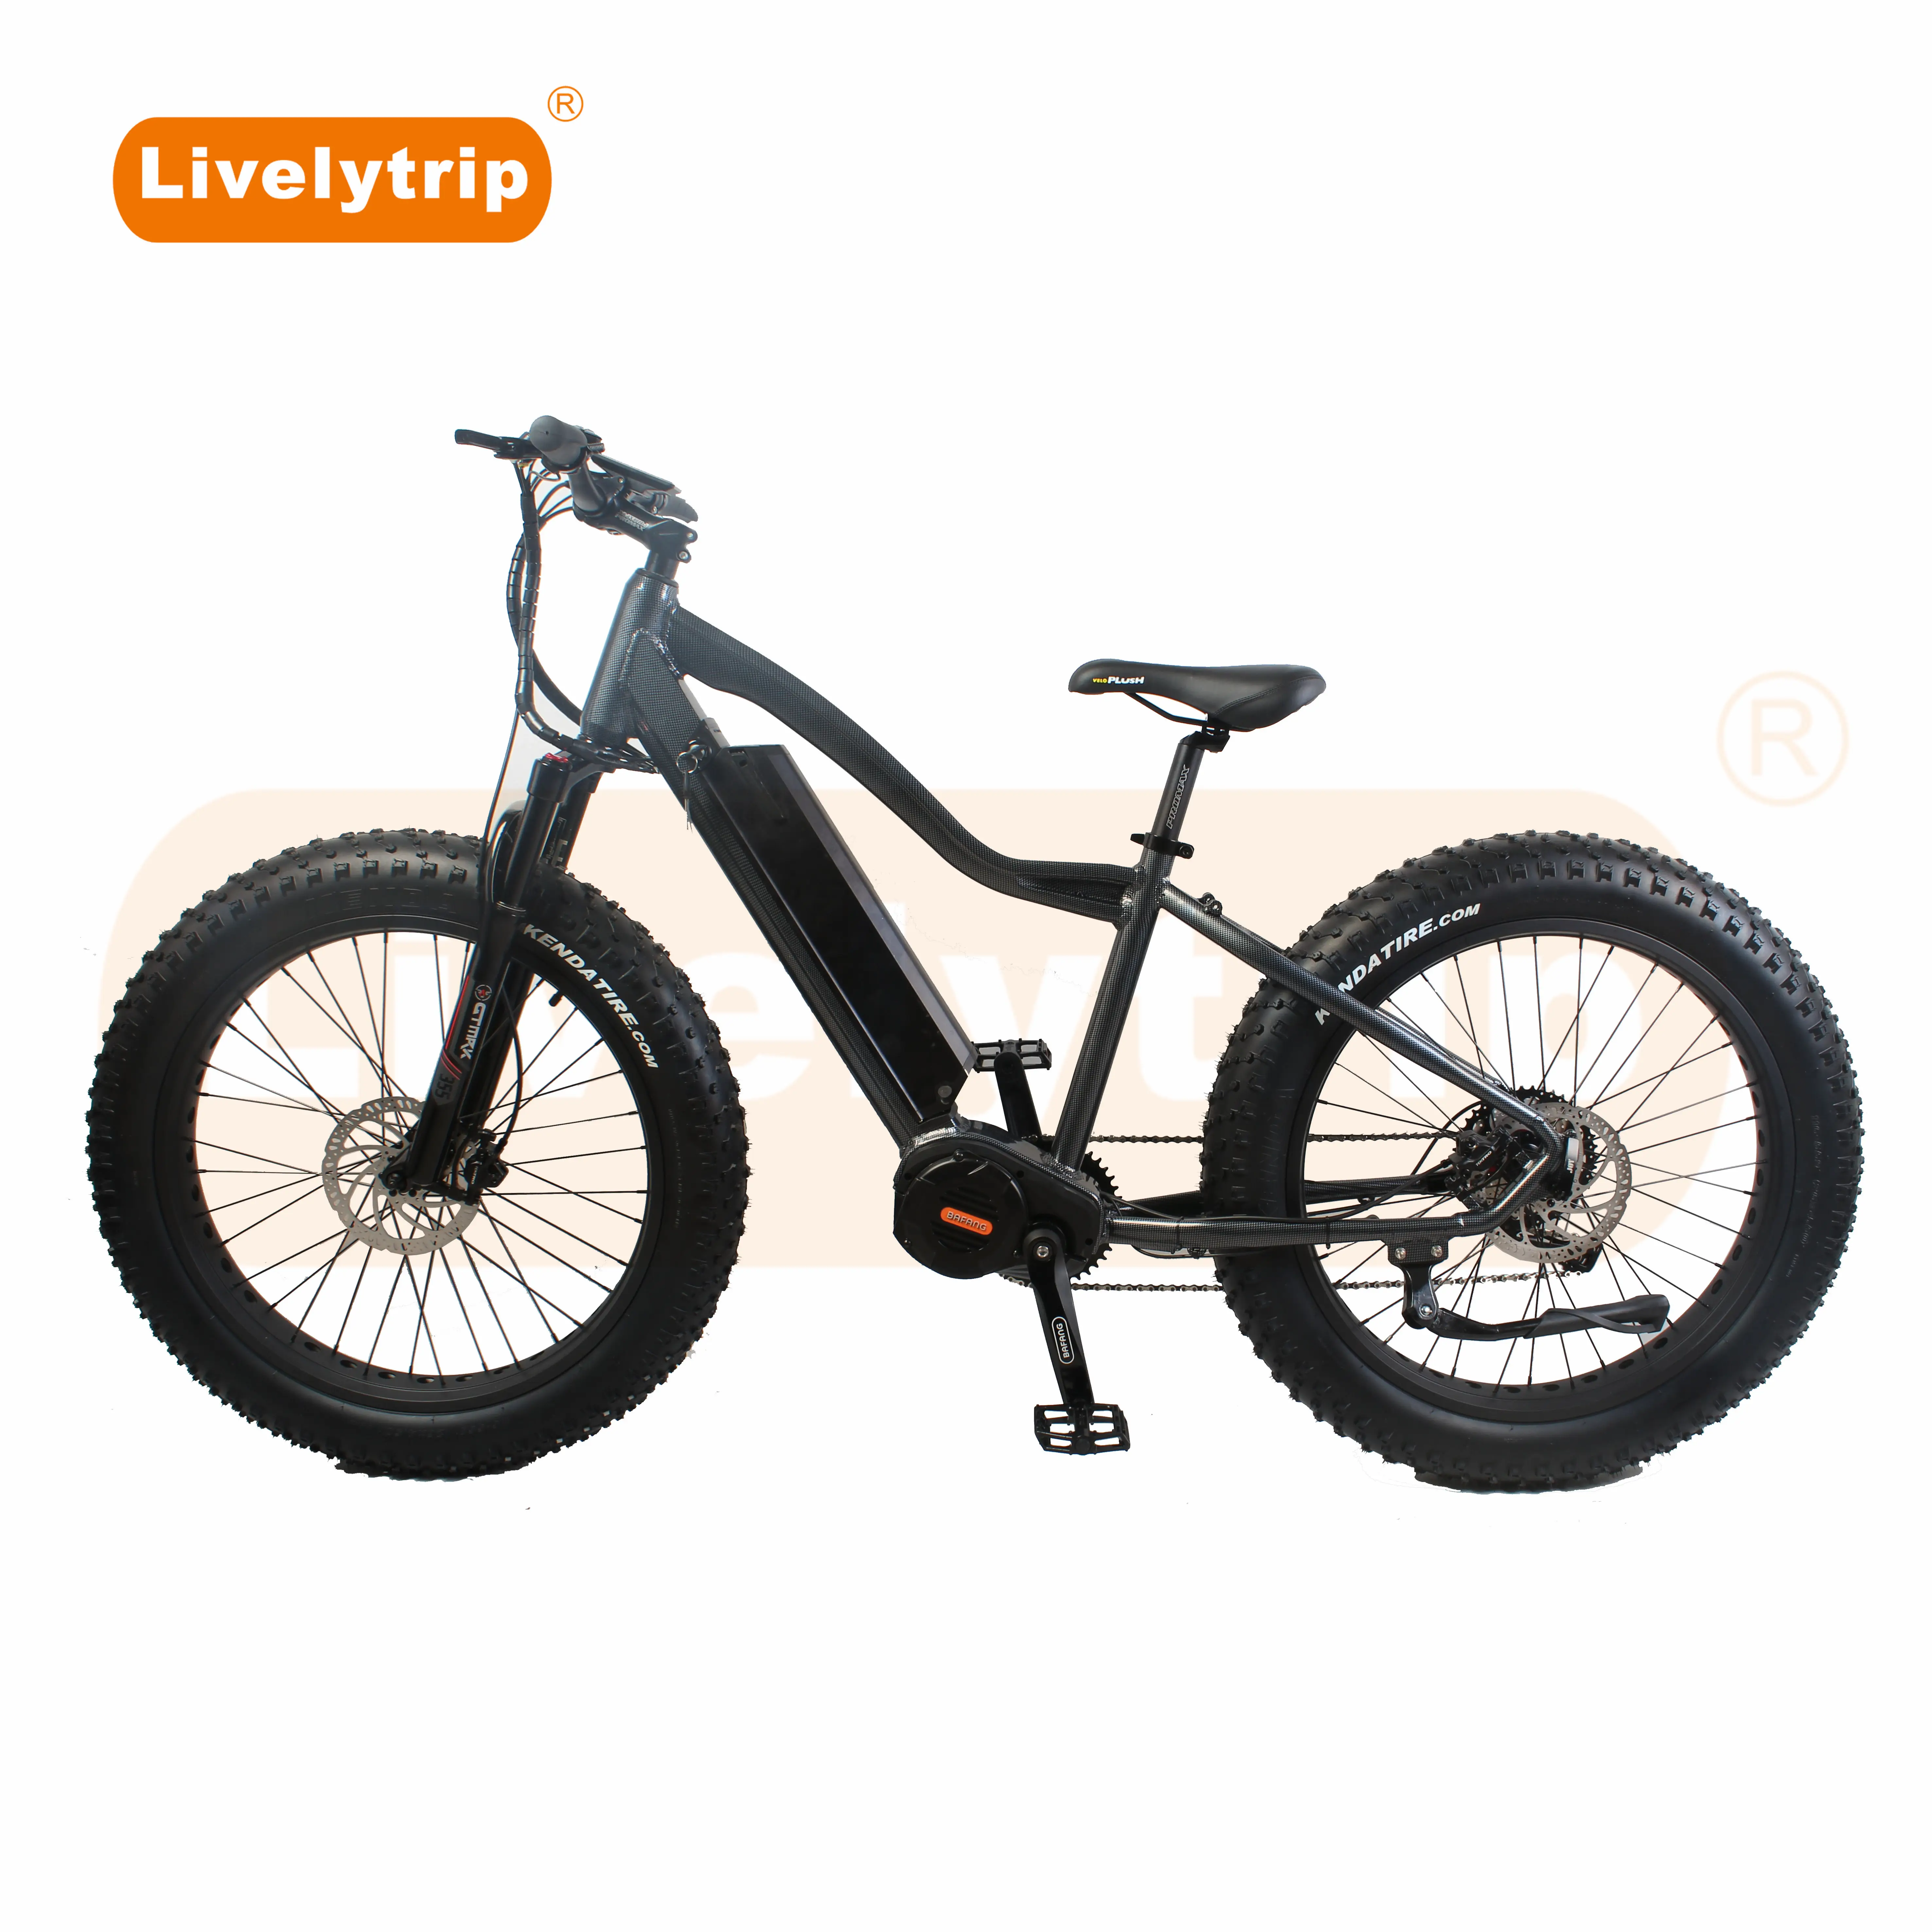 Bafang g510 ultra 1000w bici elettrica 26 pollici fat tire telaio di alta qualità